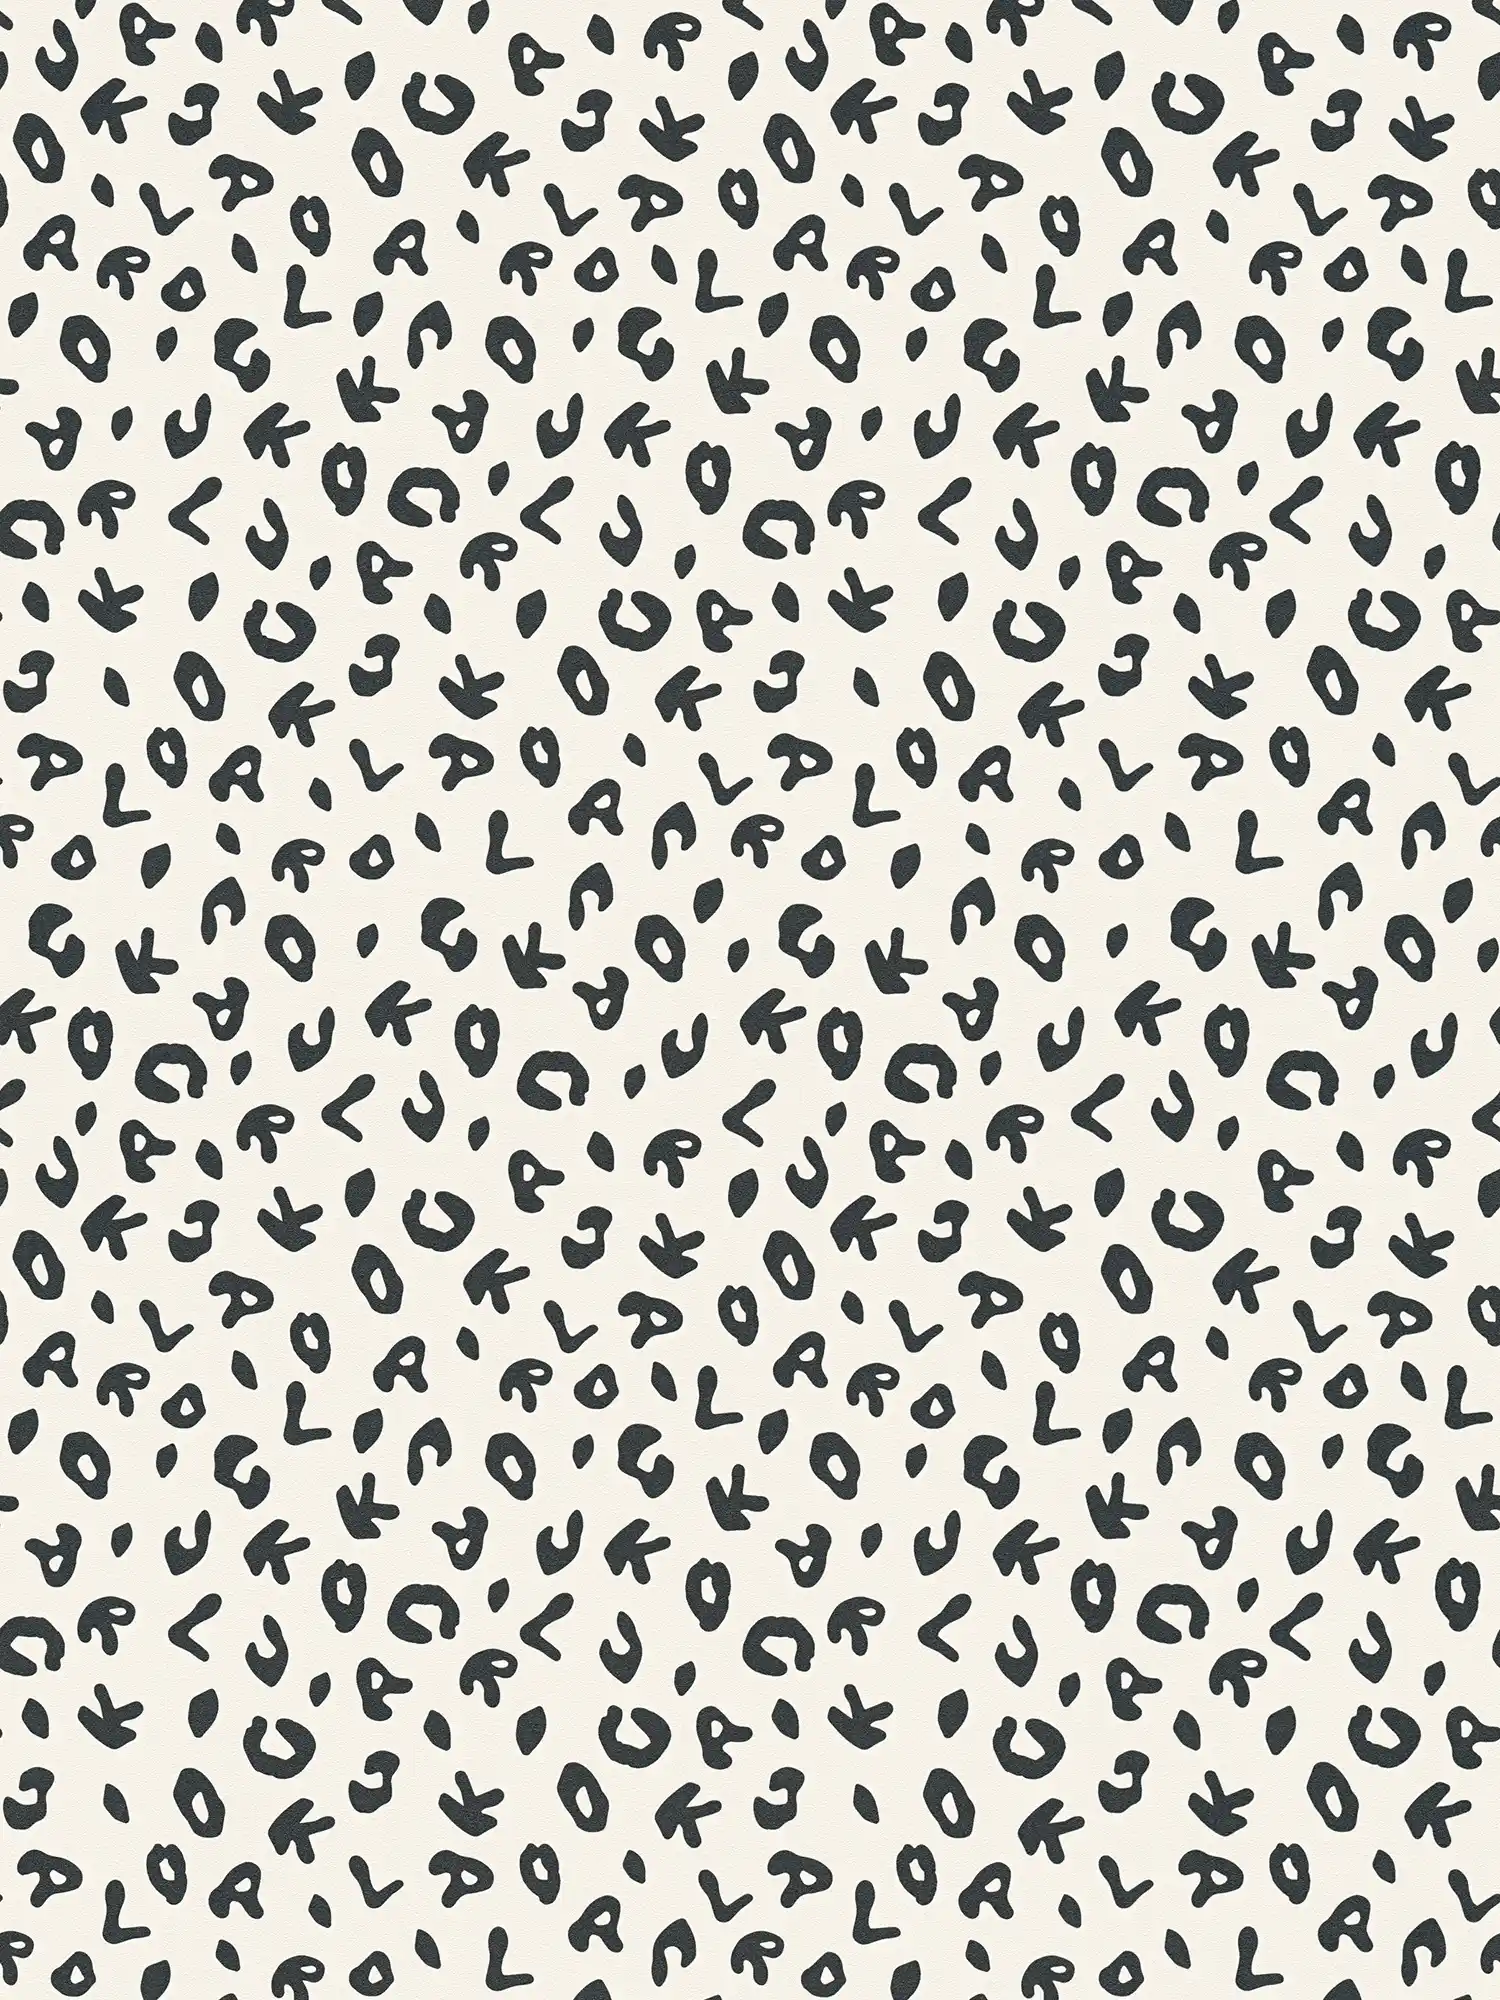 Karl LAGERFELD leopard print style wallpaper - Black, White
